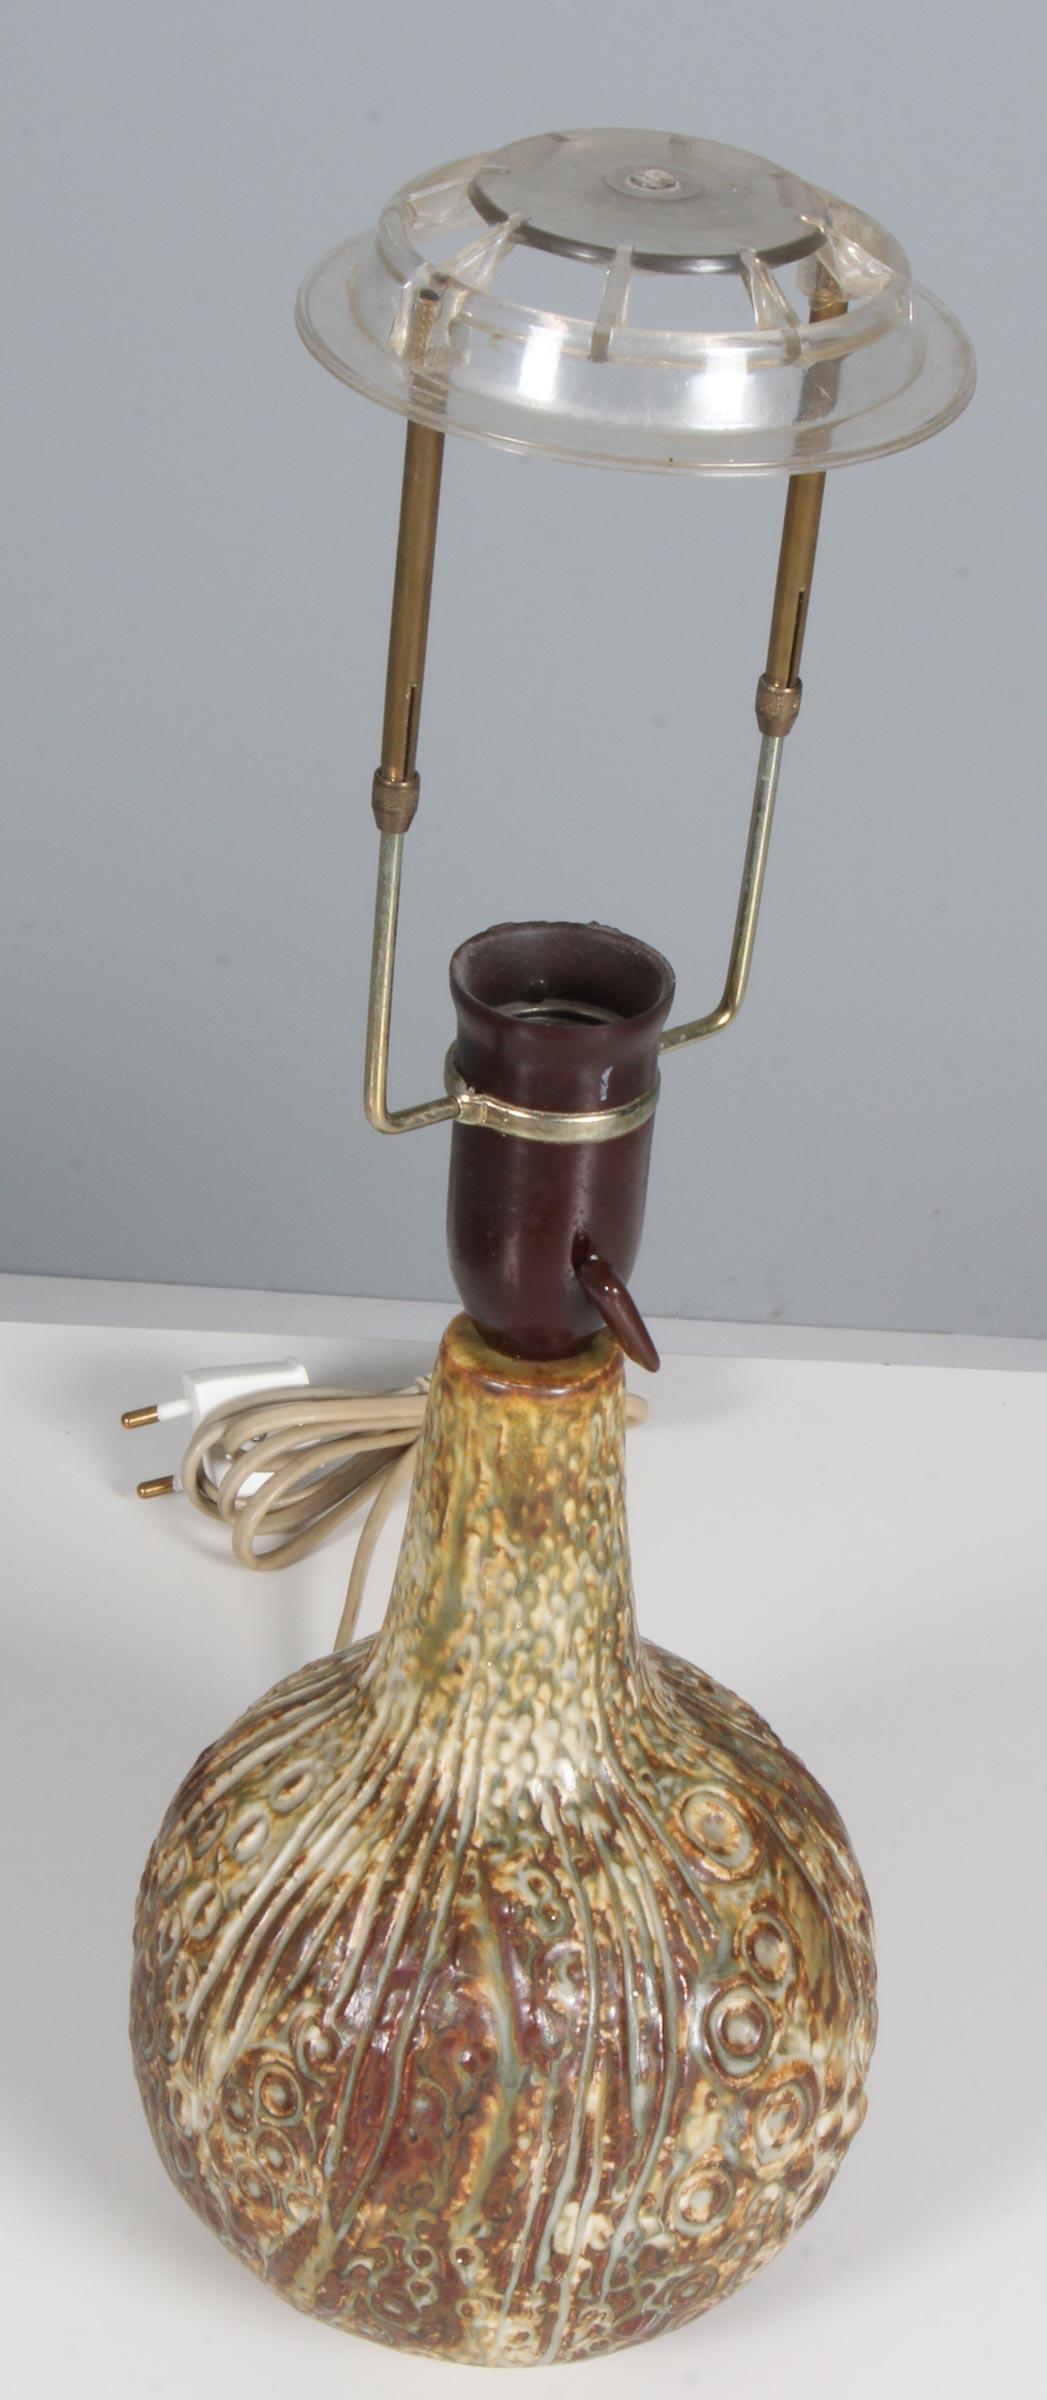 Jørgen Mogensen table lampe in glazed ceramic